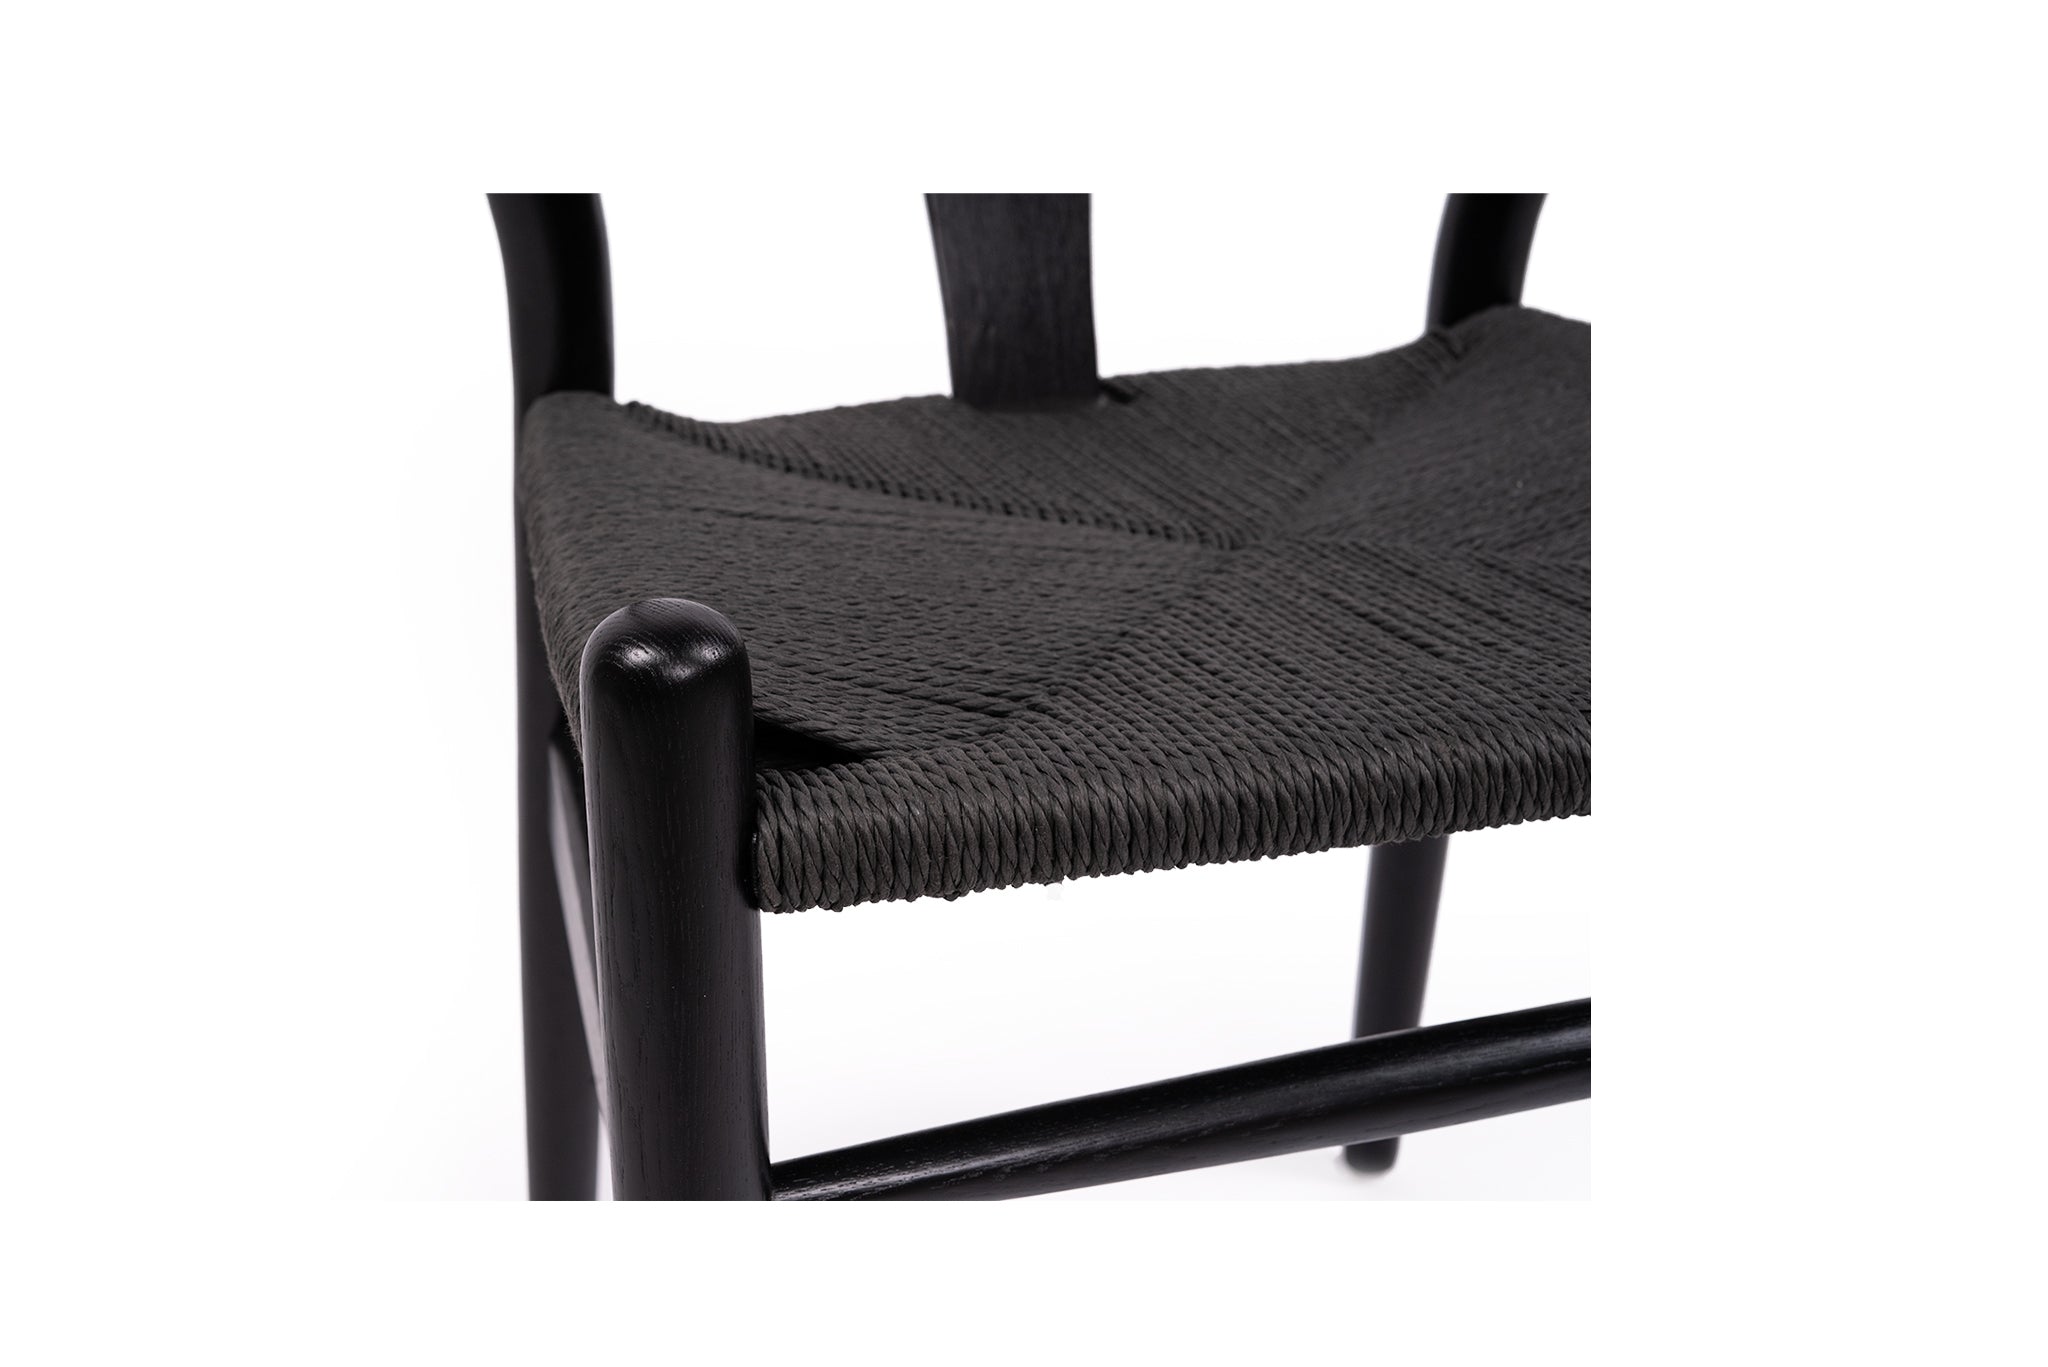 Hans Wegner Wishbone Replica Dining Chair – Black on Black